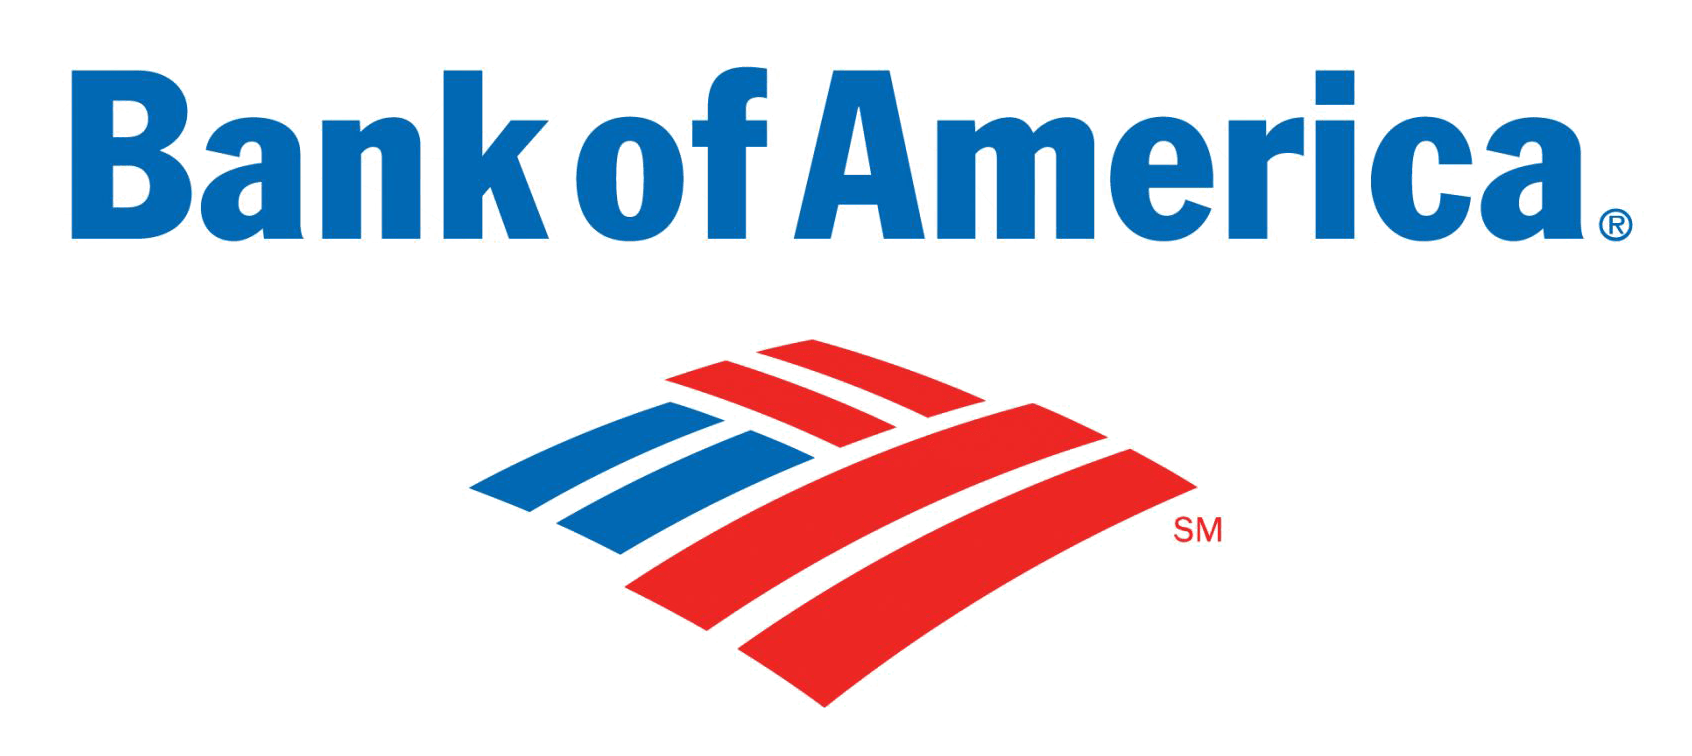 Baml Logo - Bank of America | $BAC Stock | Shares Surge On Q2 Profit Rise ...